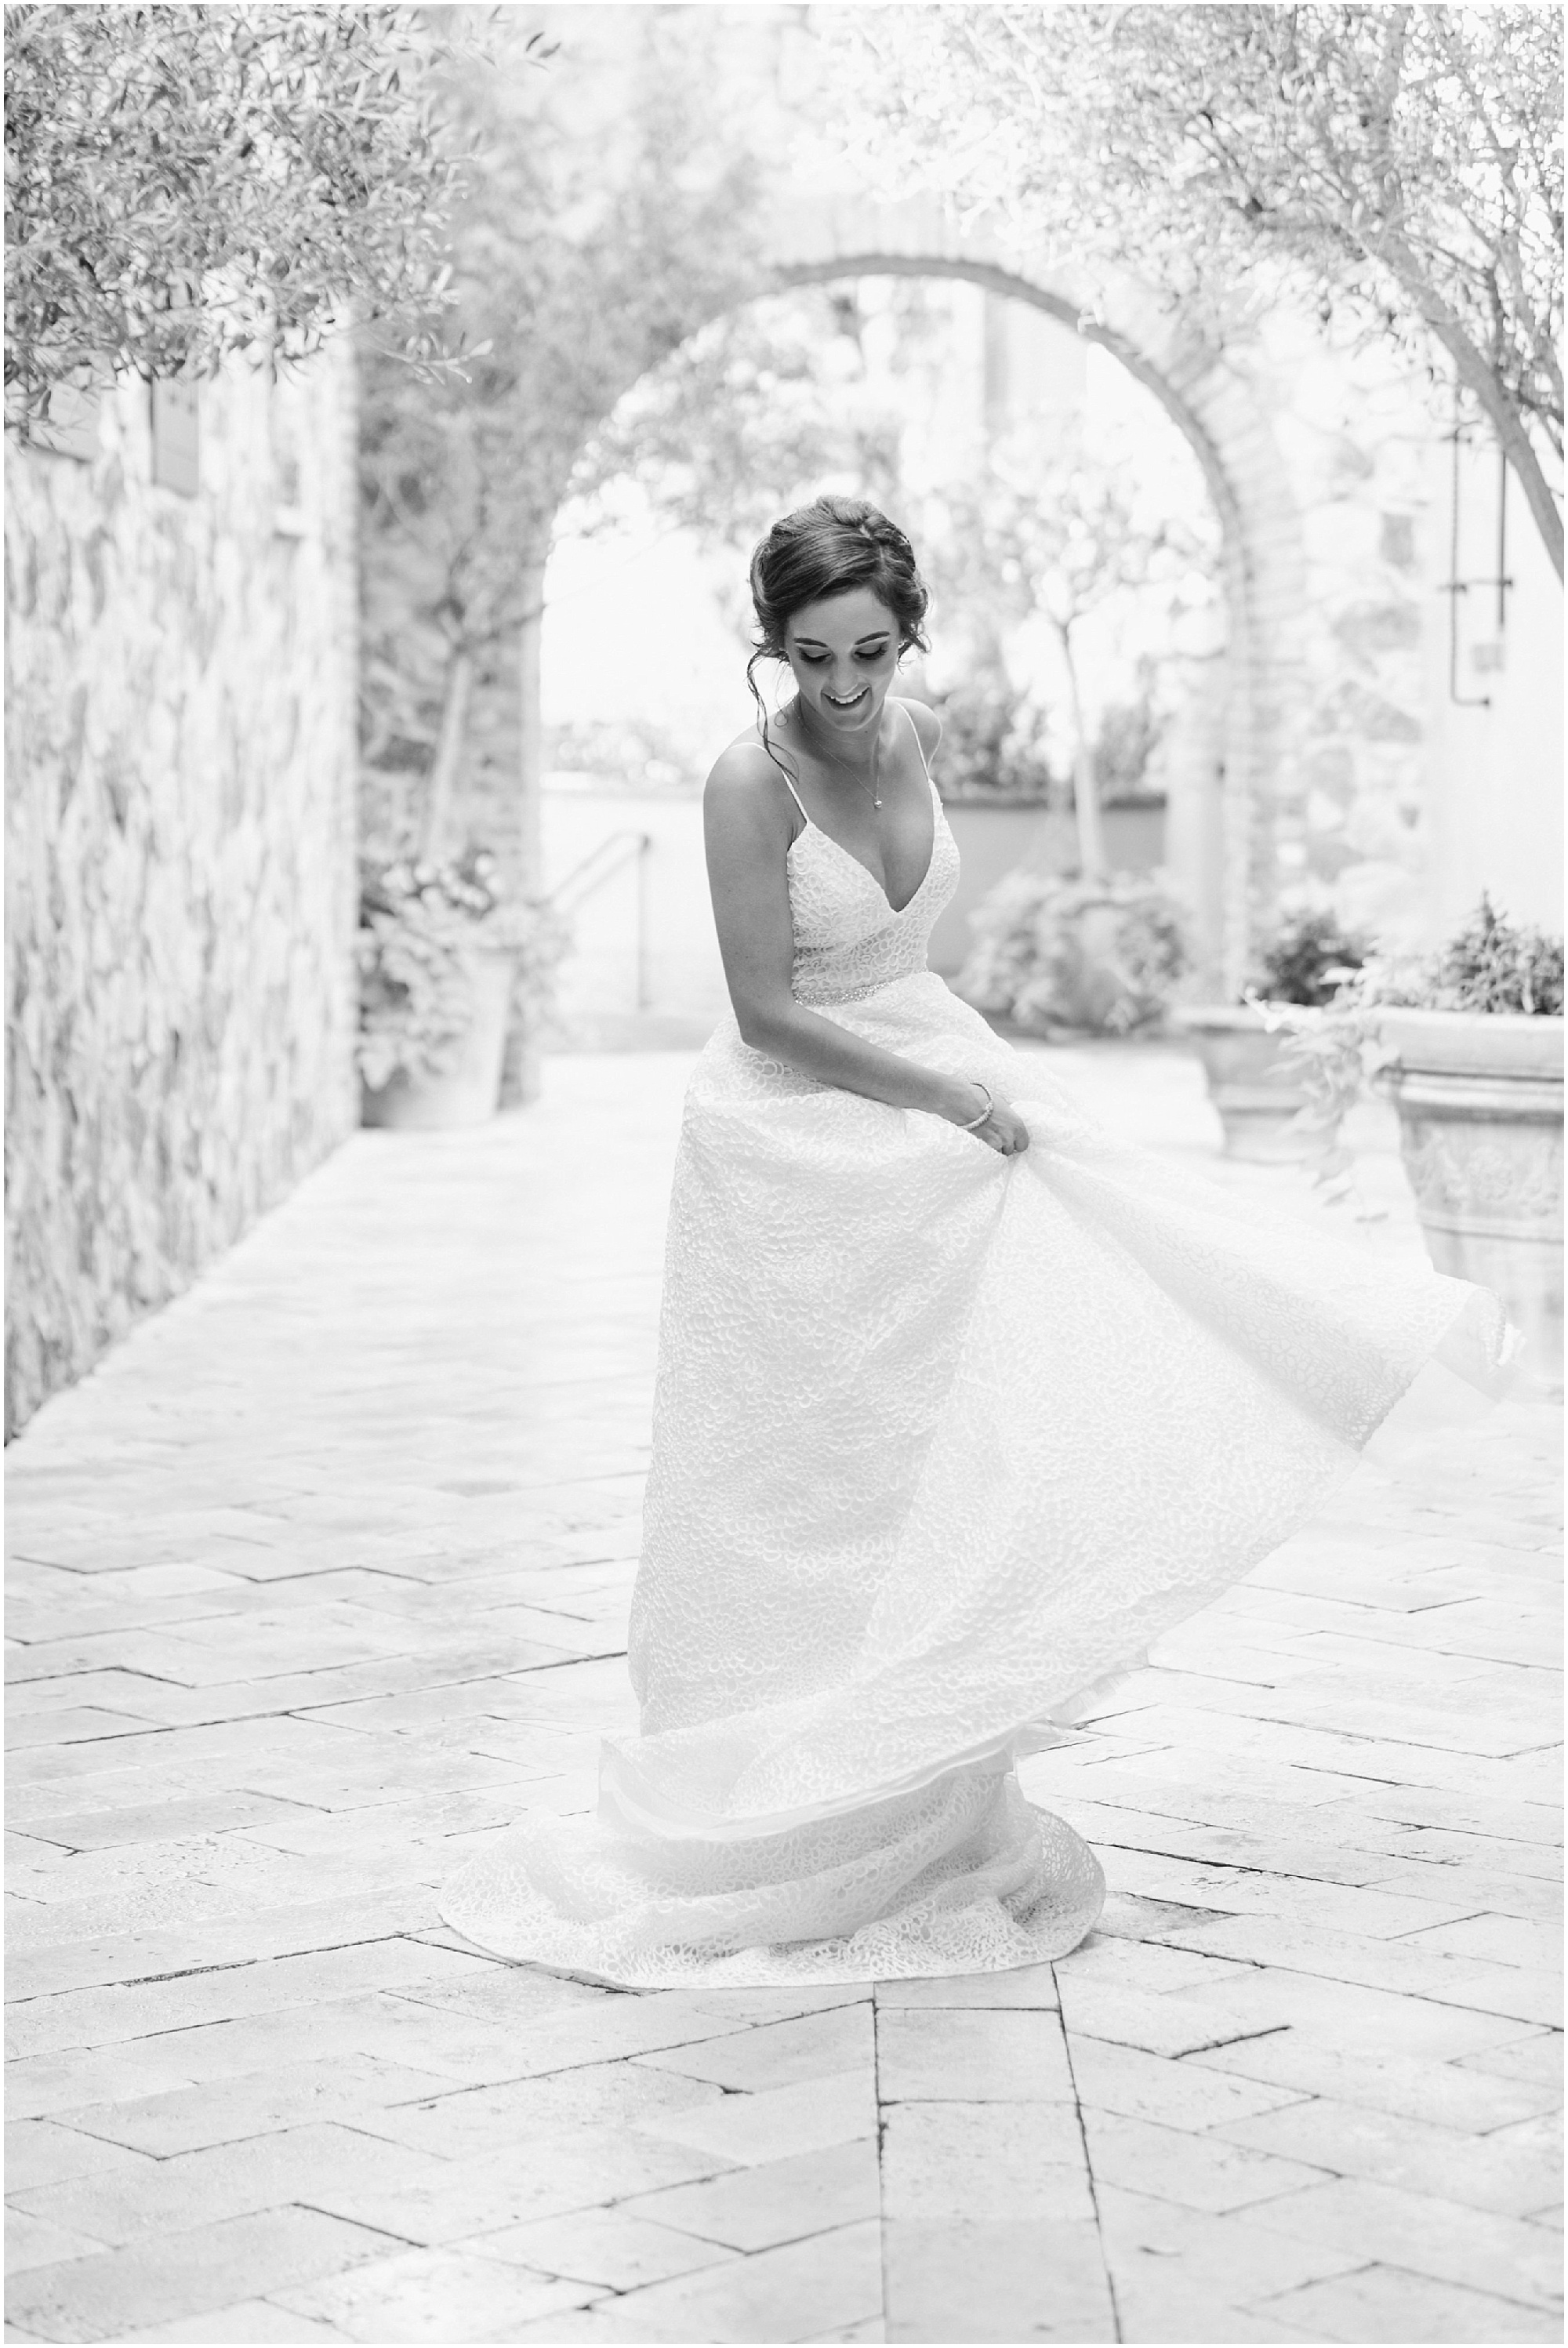 Bride twirling in her wedding dress.